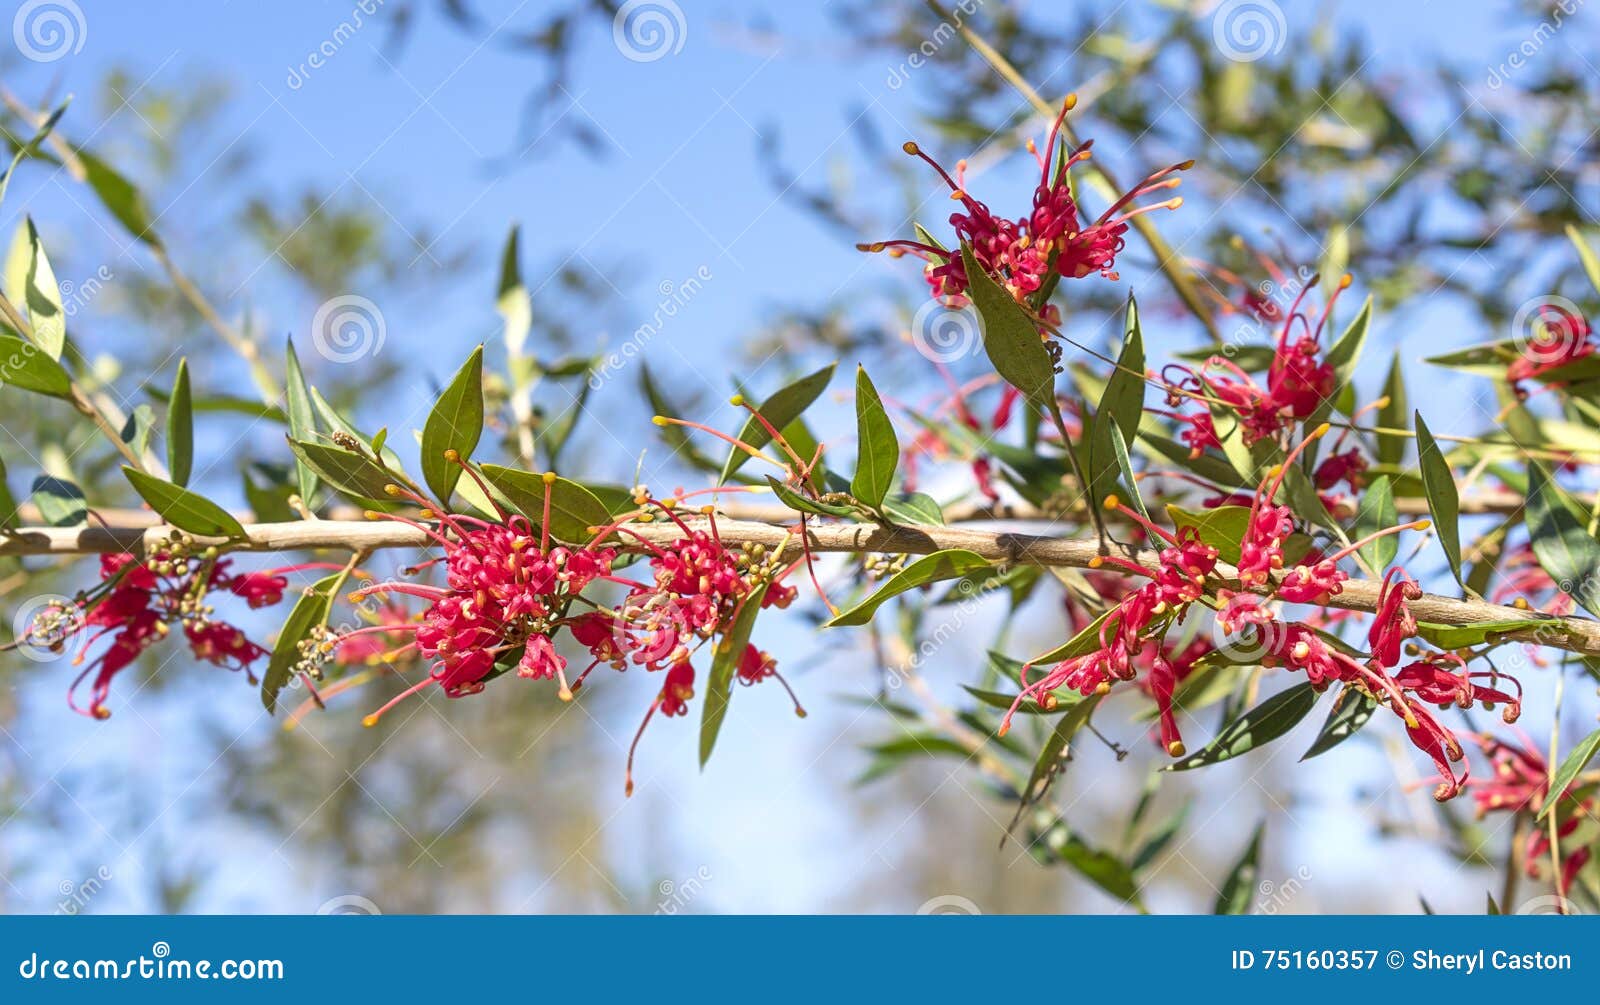 australian red grevillea splendour flowers